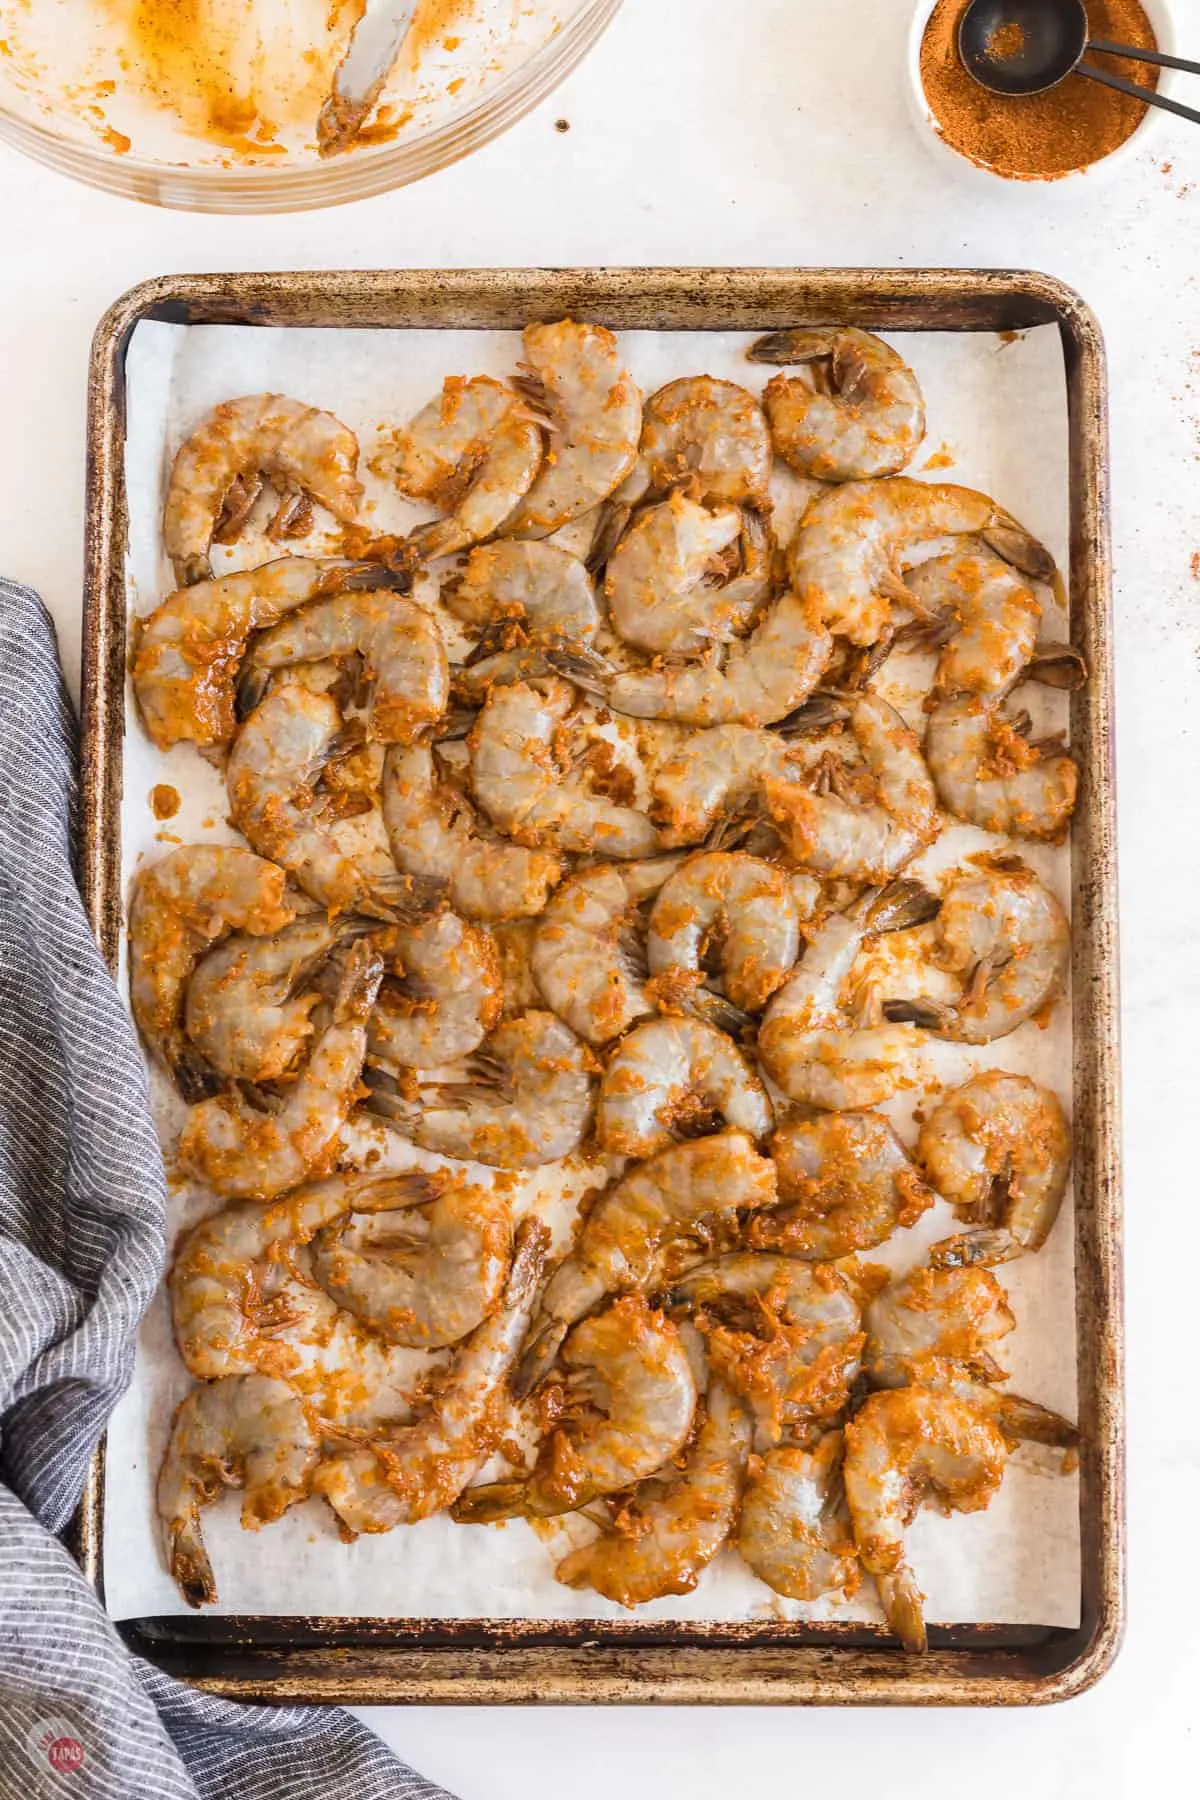 uncooked shrimp on a baking sheet